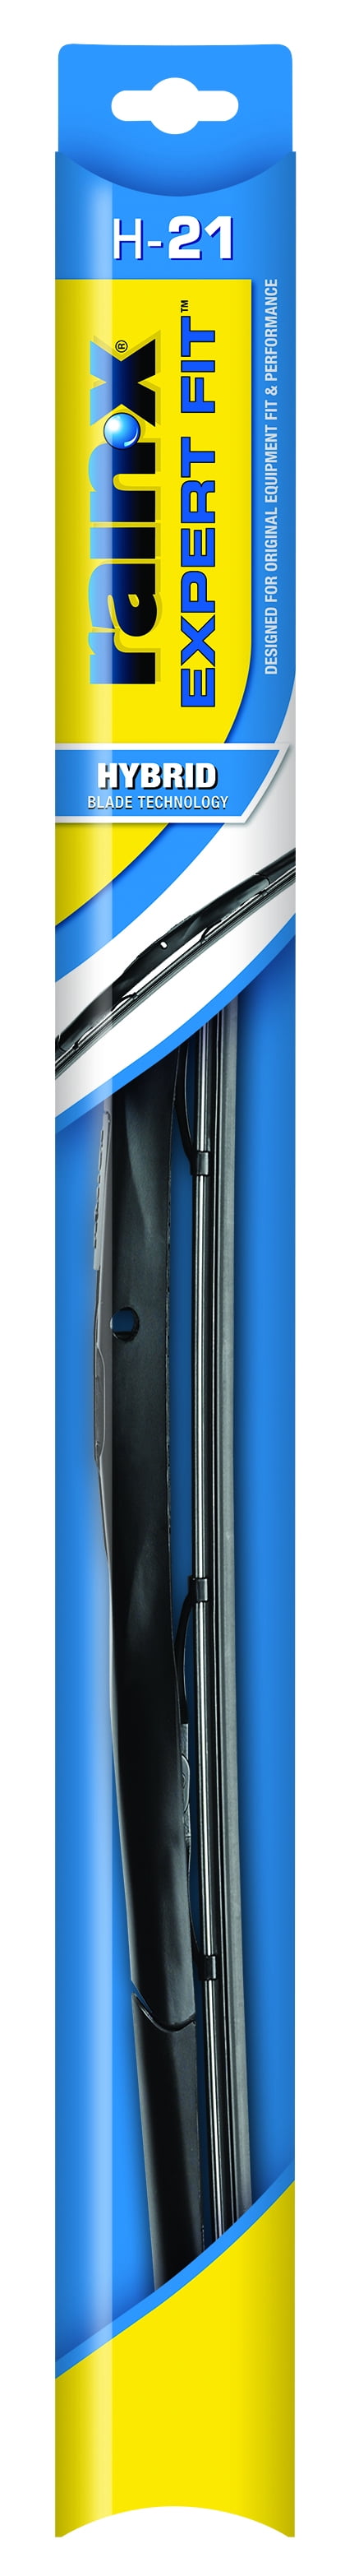 Rain-X Expert Fit Hybrid Windshield Wiper Blade 21" Replacement H21